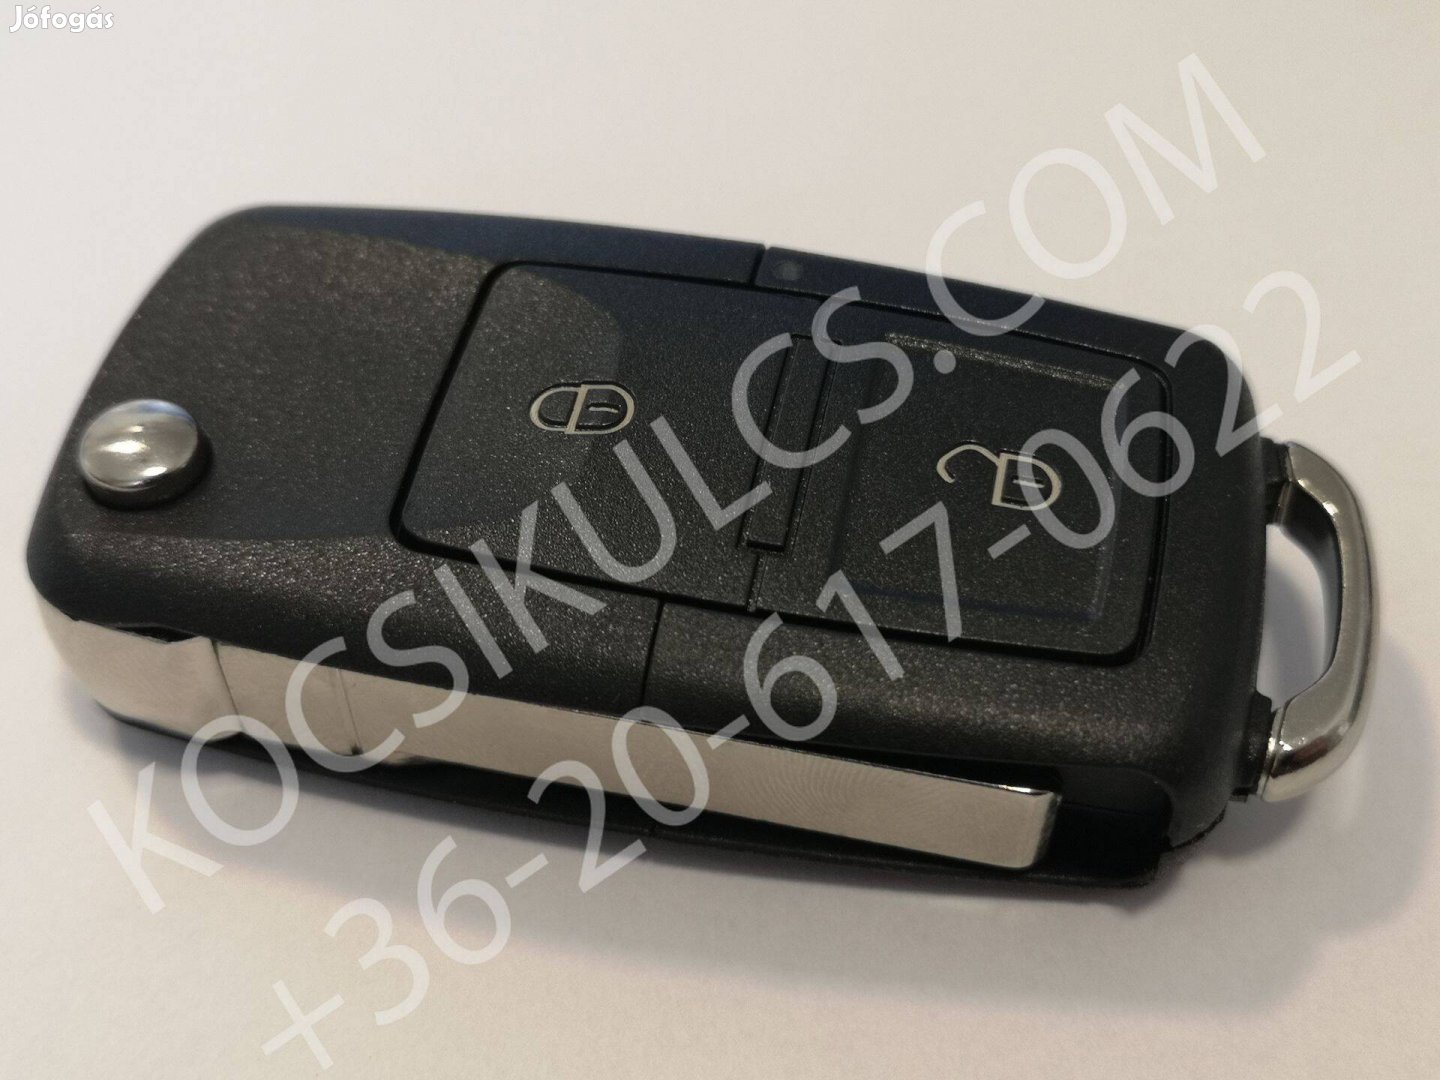 VW Seat Ford bicskakulcs 7M3959753 gyári elektronikával ID44 chip